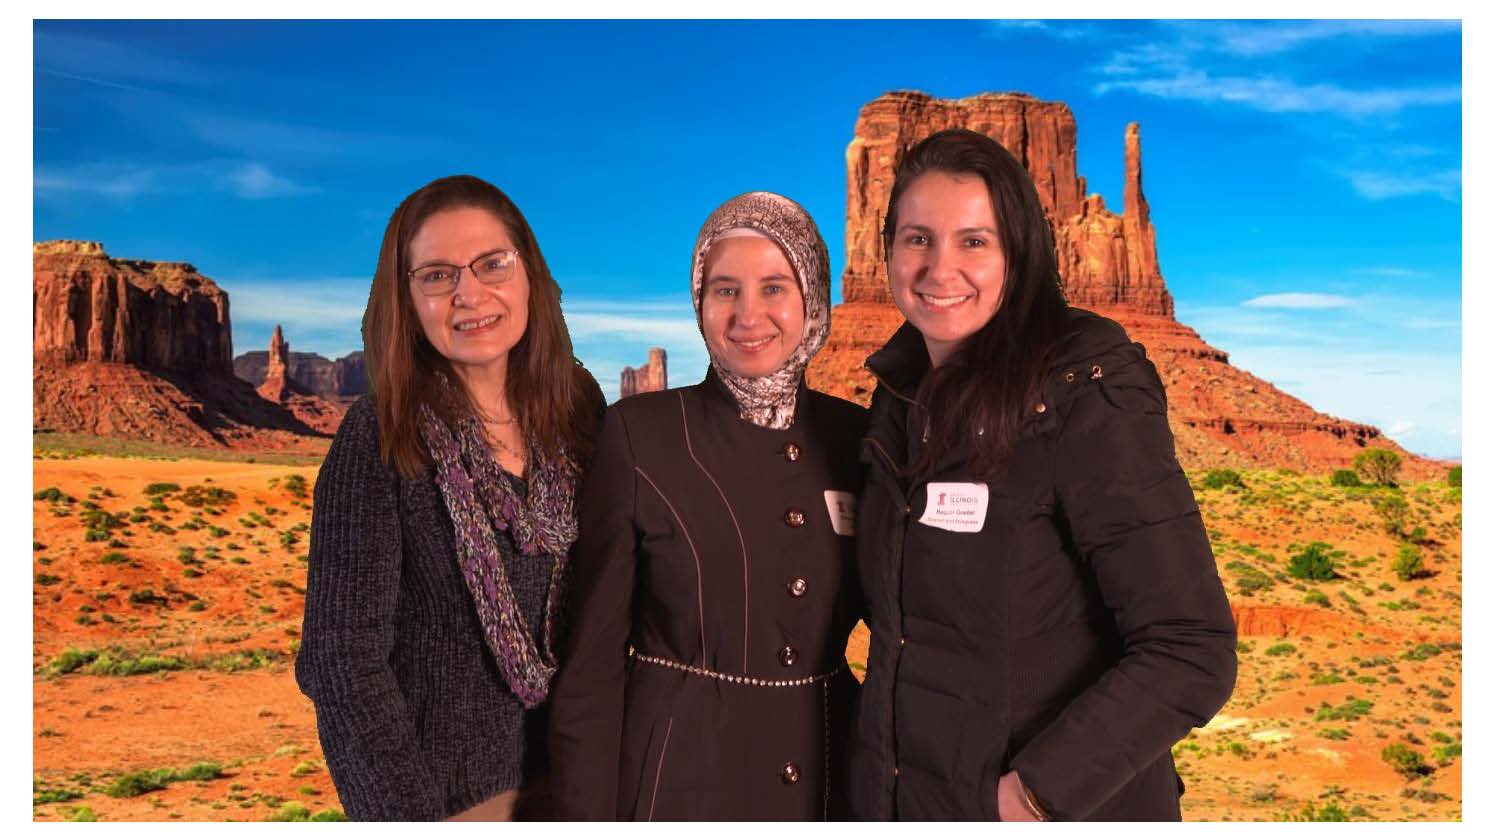 Donna Tonini, Eman Saadah and Raquel Castro Goebel posing in front of the desert backdrop